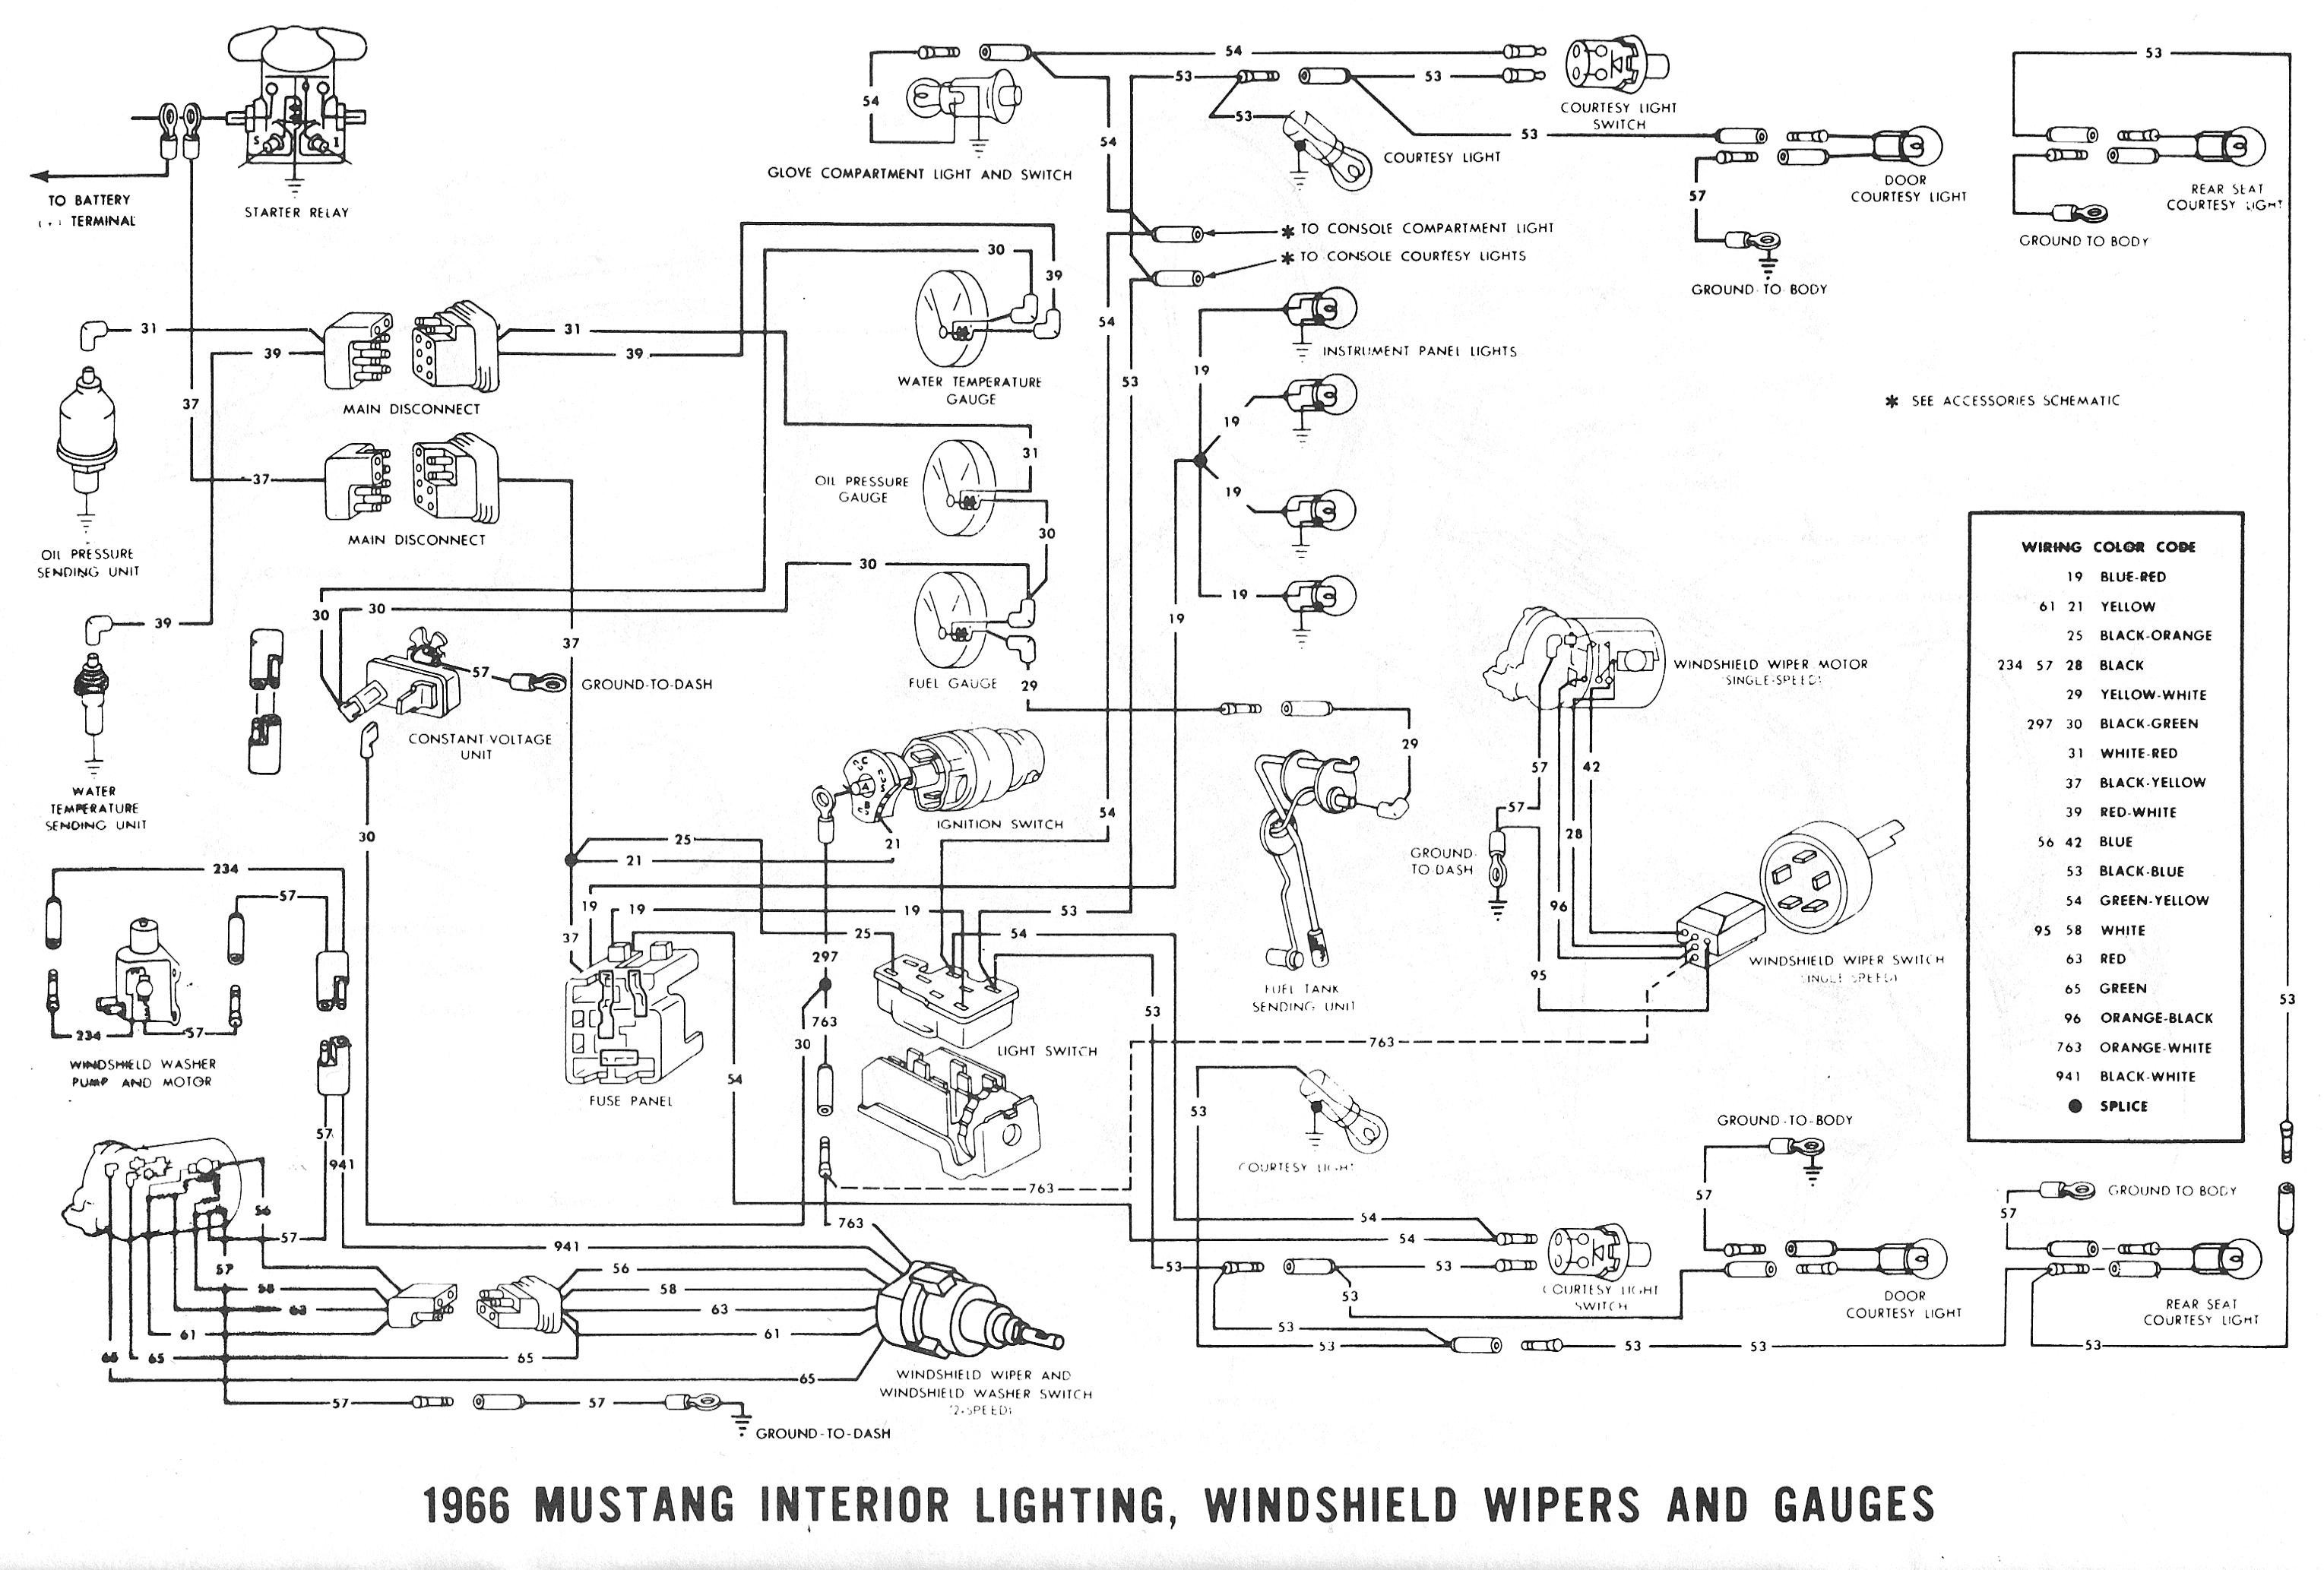 mgb gt wiring diagram - Wiring Diagram